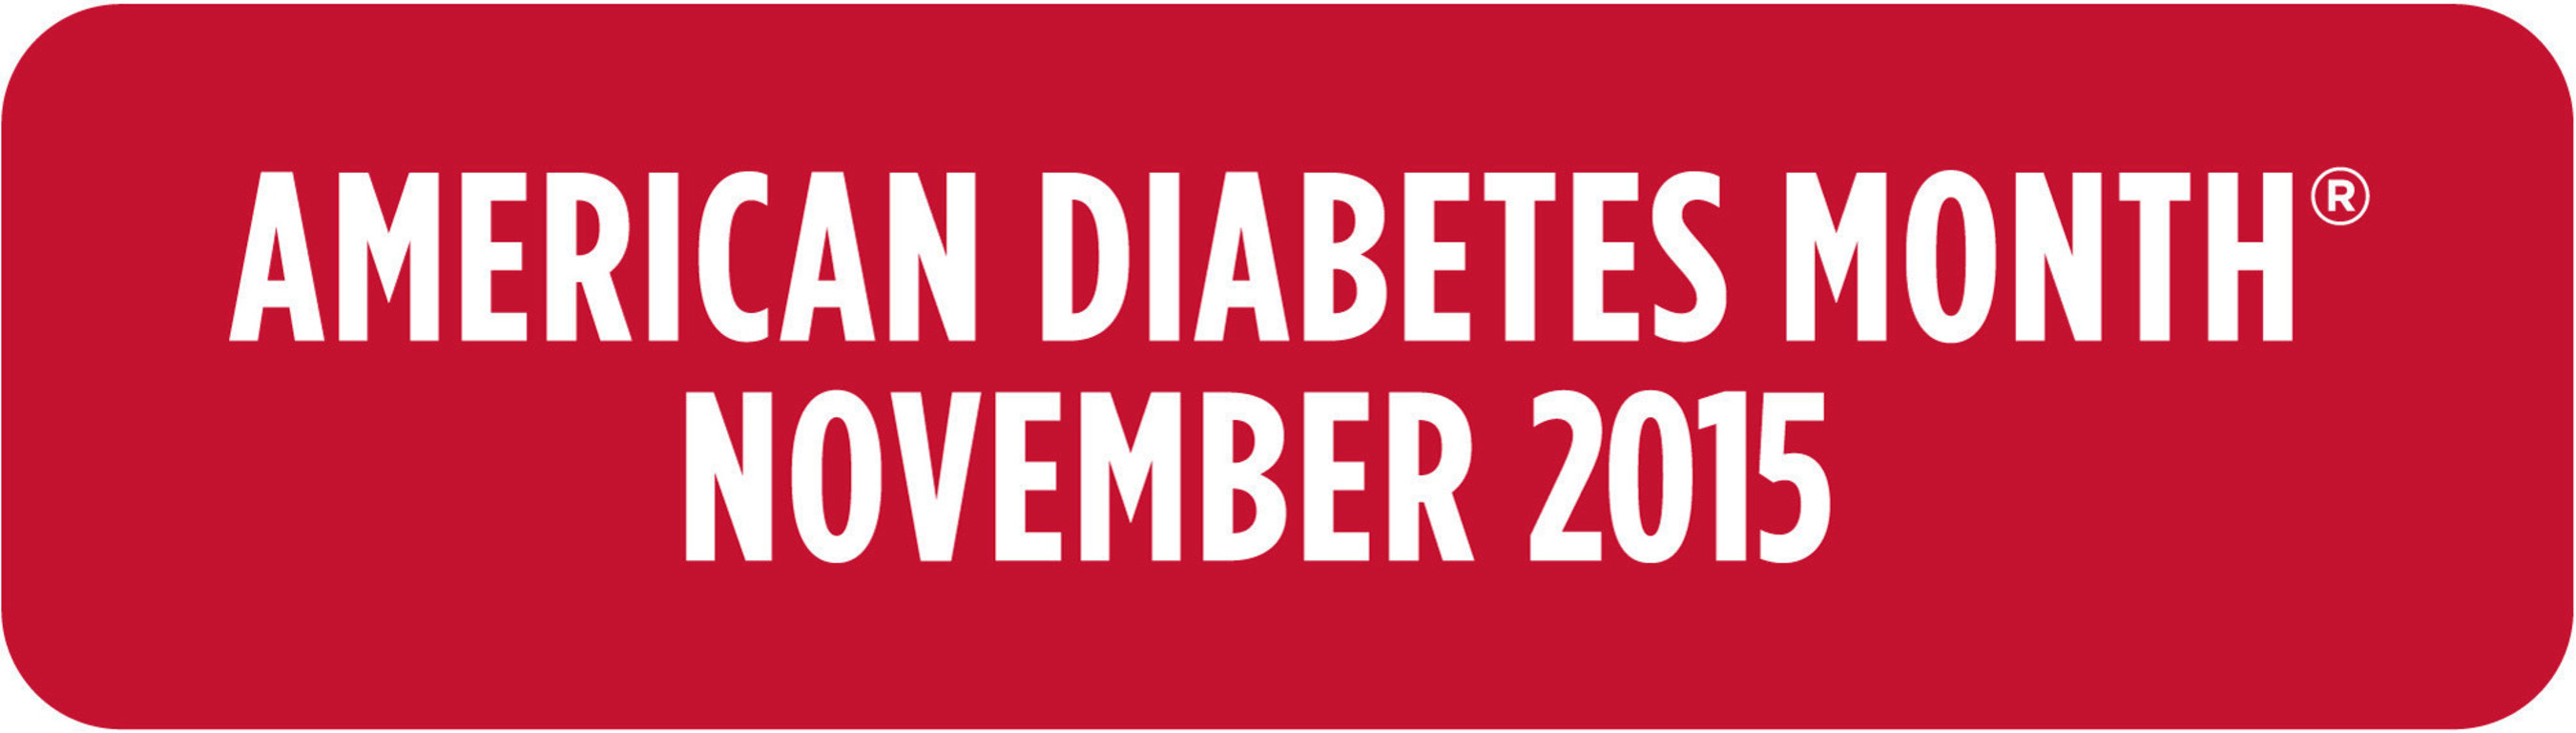 American Diabetes Month November 2015